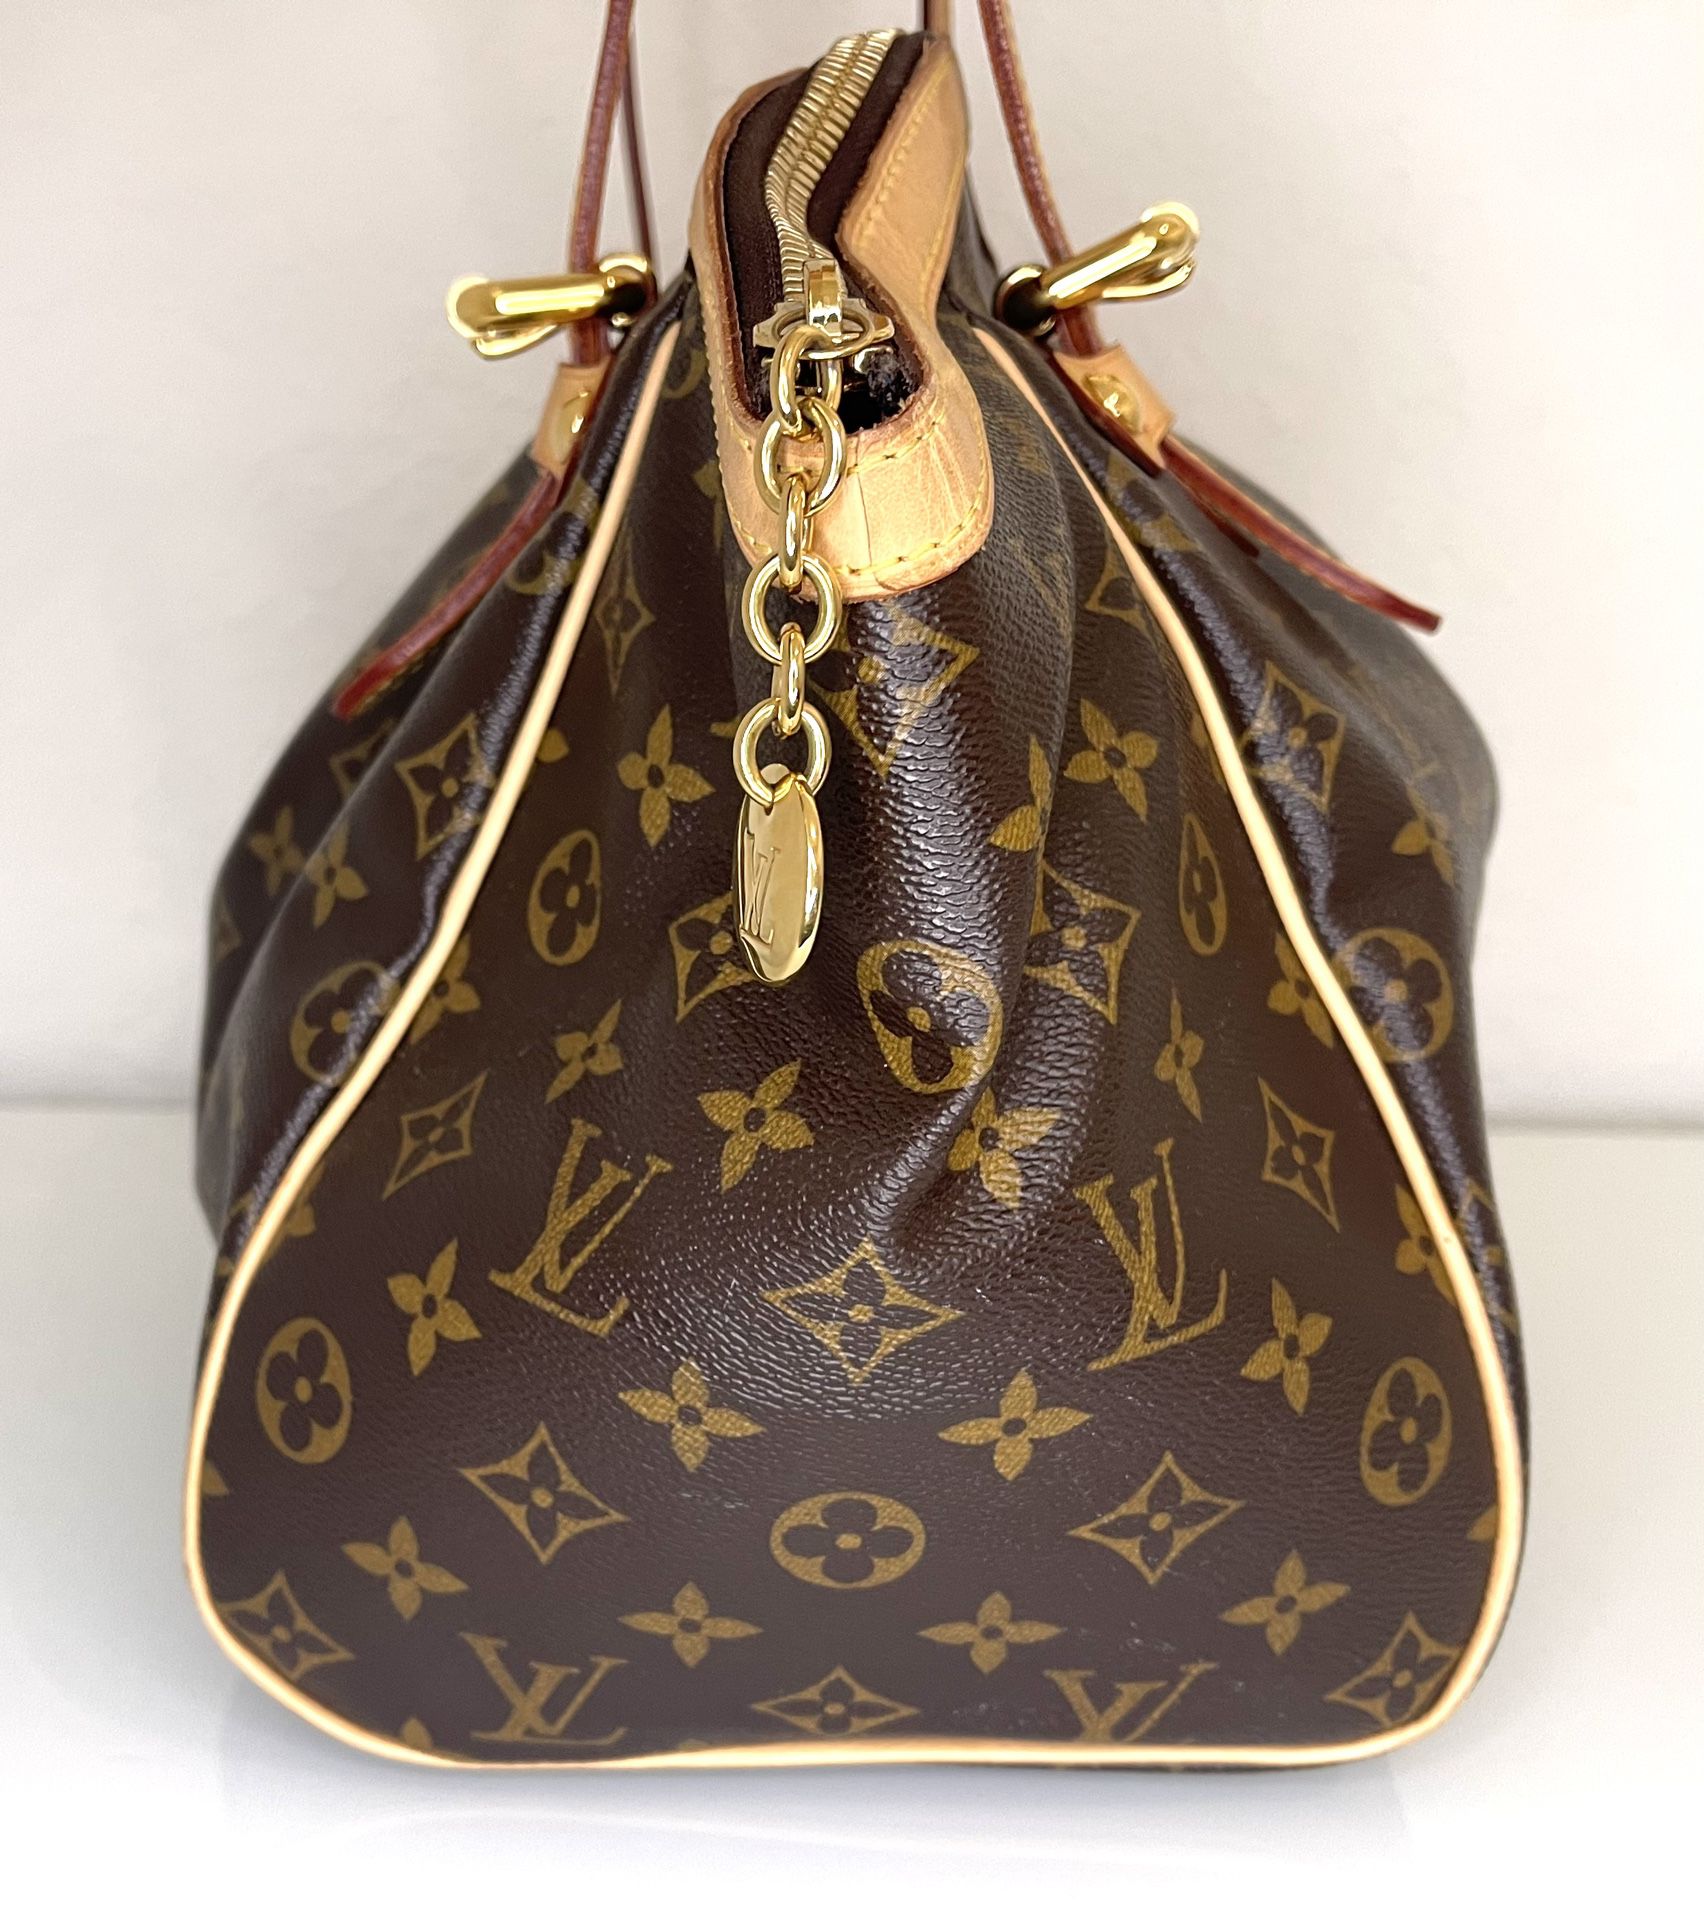 Authentic Louis Vuitton Tivoli GM Bag Purse Handbag for Sale in Everett, WA  - OfferUp